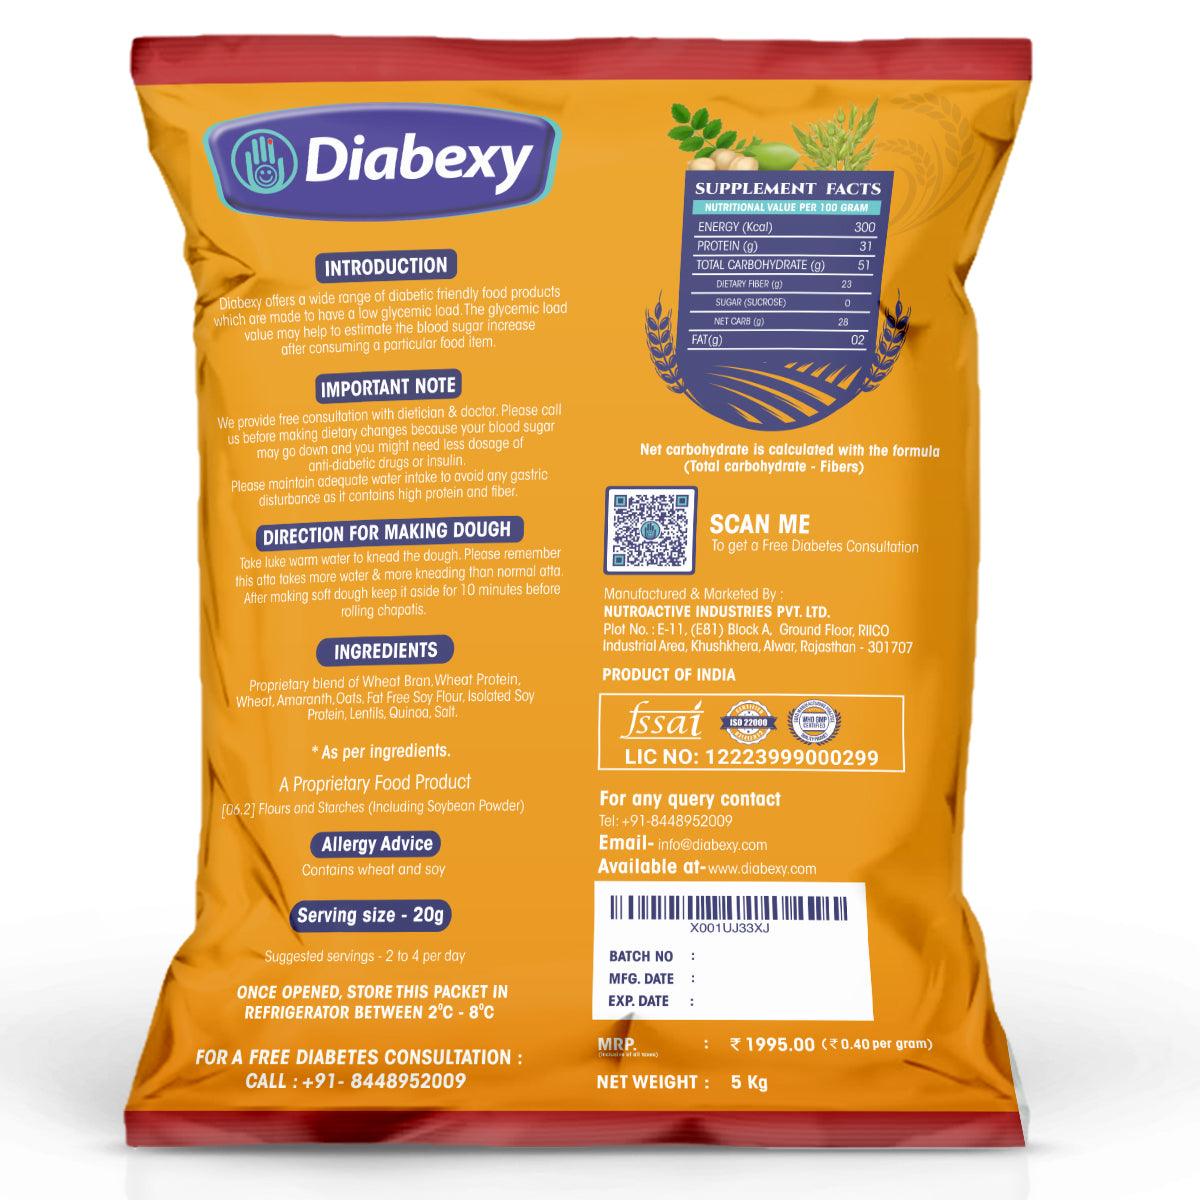 Diabexy Sugar Control Atta LITE Nuts Free - 5KG - Diabexy